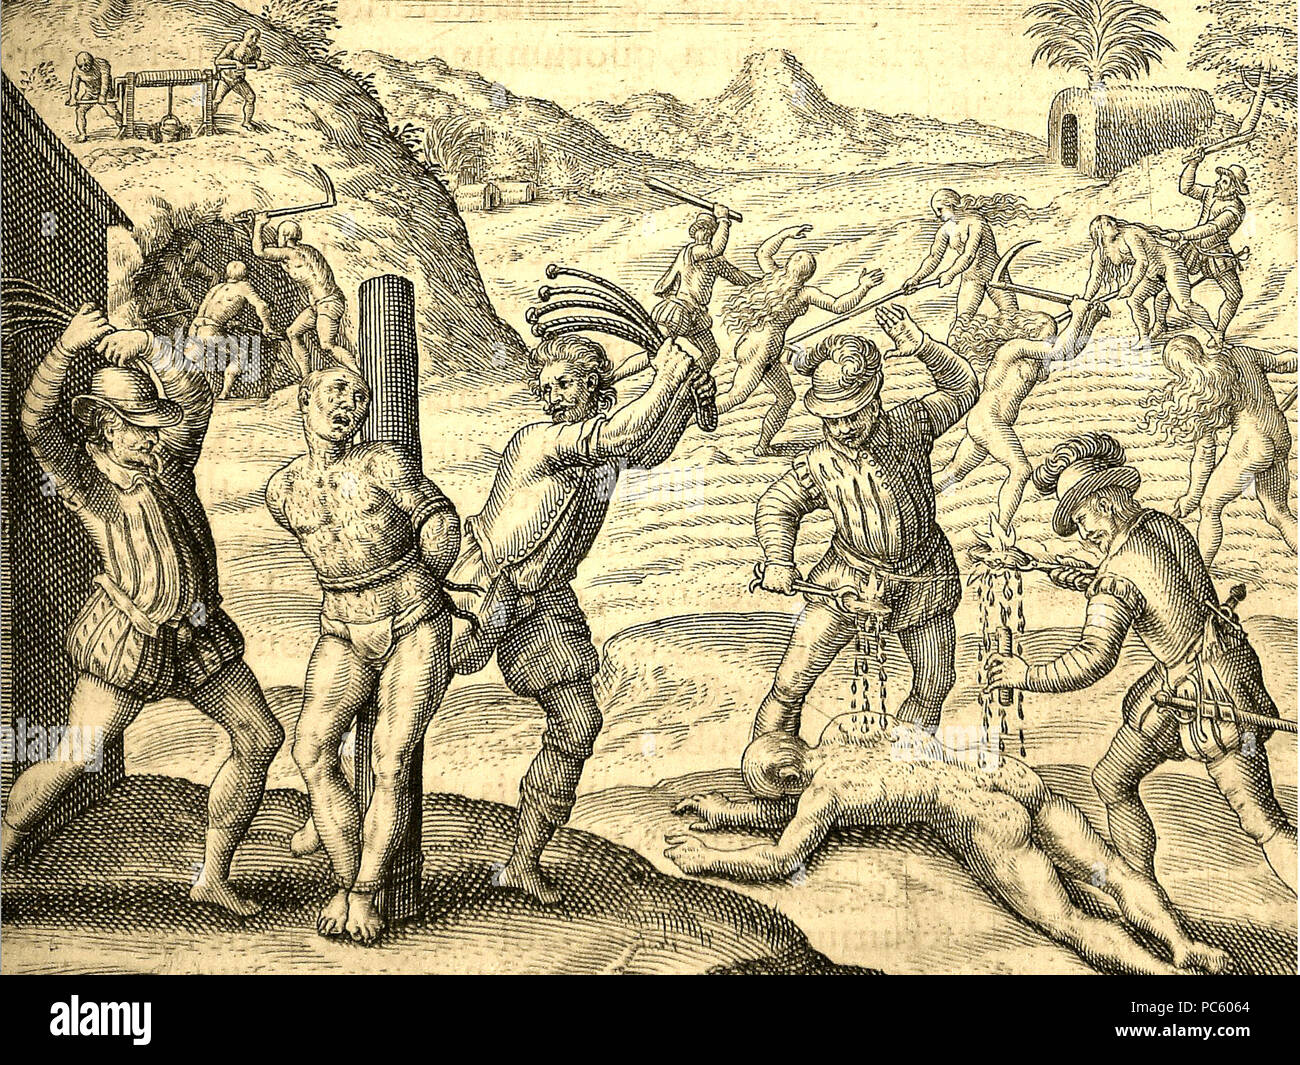 20 Conquistadors' abuses of Amerindians (1598 edition for las Casas' book) Stock Photo